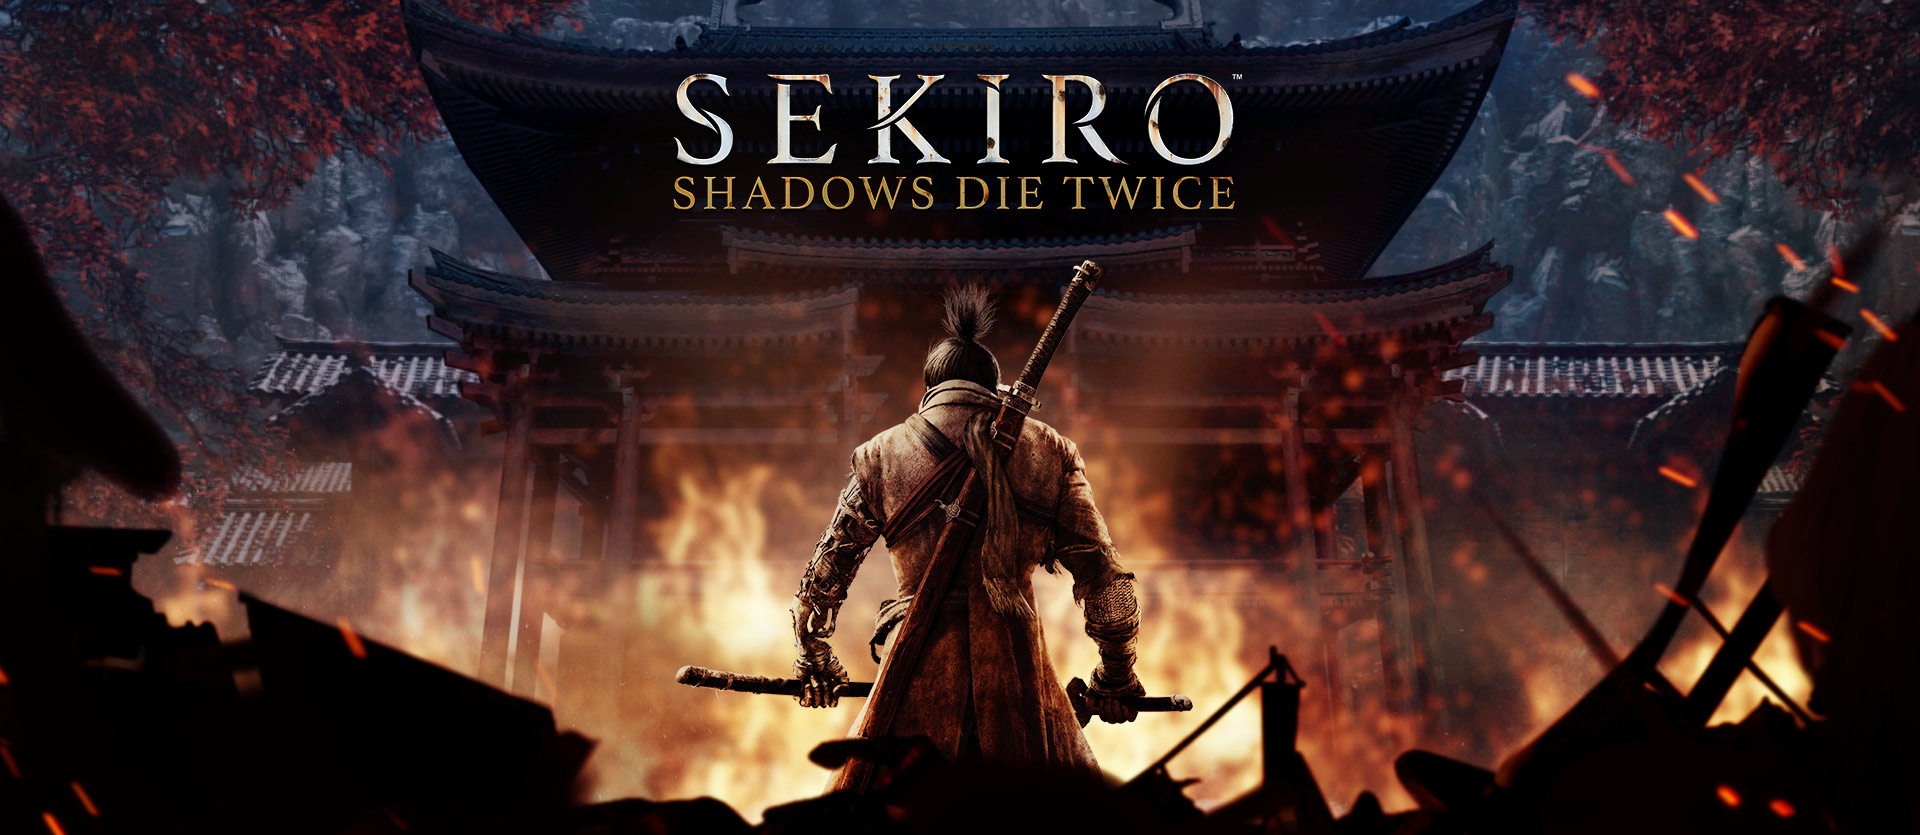 Sekiro: Shadows Die Twice, Five Ways to Become the Ultimate Shinobi